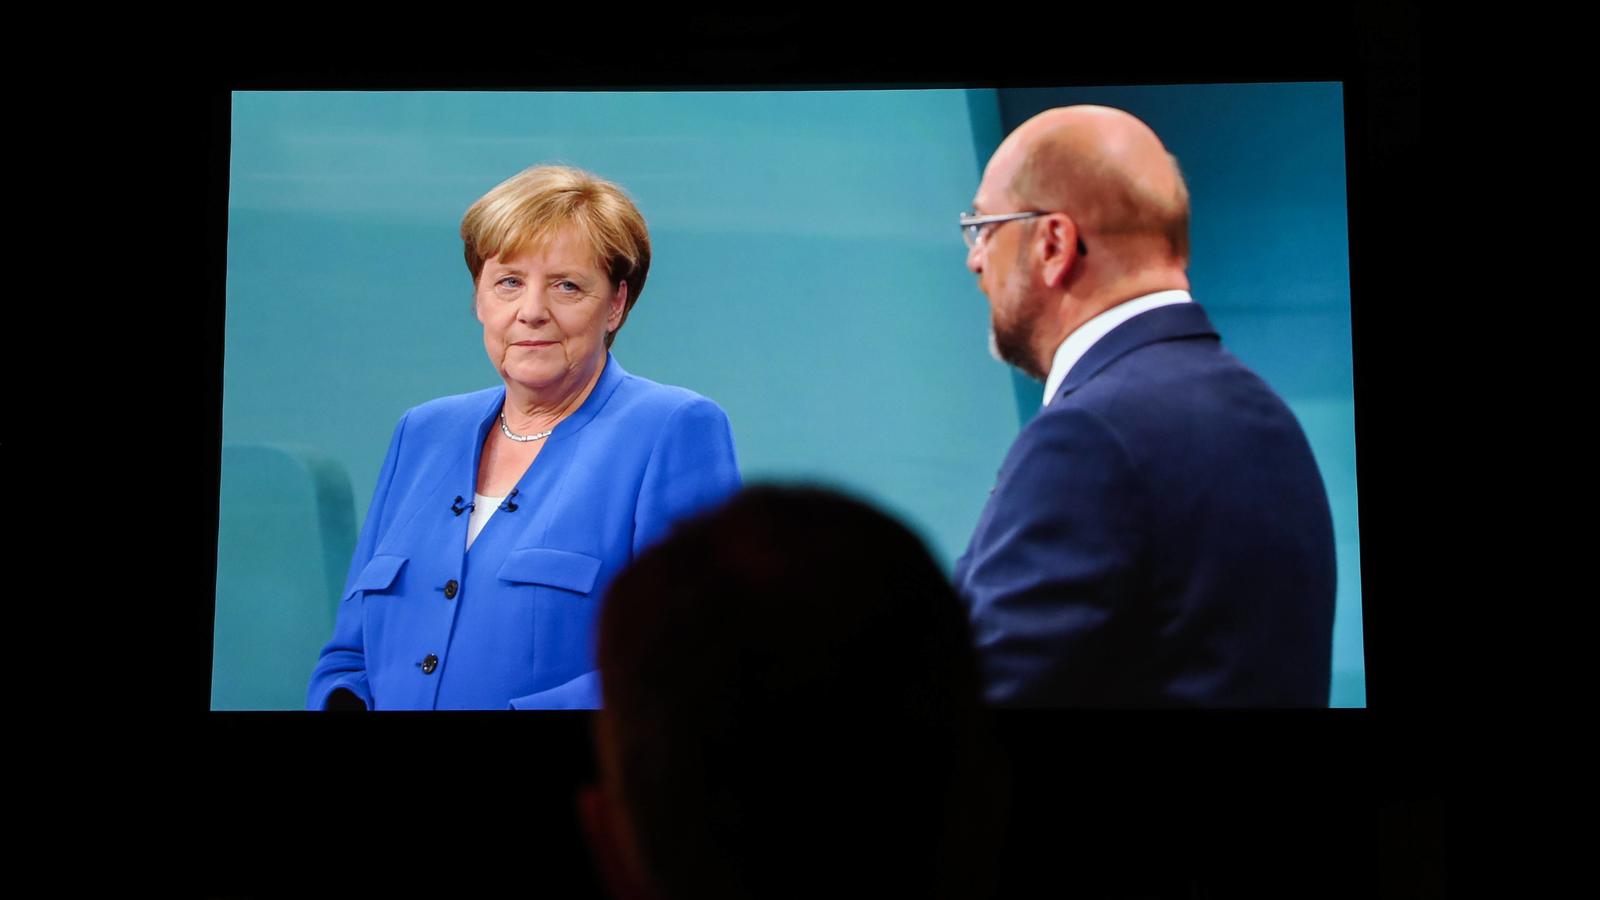 TV Duell zur Bundestagswahl - Liveübertragung  (170904) -- BERLIN, Sept. 4, 2017 -- A man watches the TV duel between German Chancellor Angela Merkel and Martin Schulz, chancellor candidate of the Social Democratic Party (SPD), at a media center in B